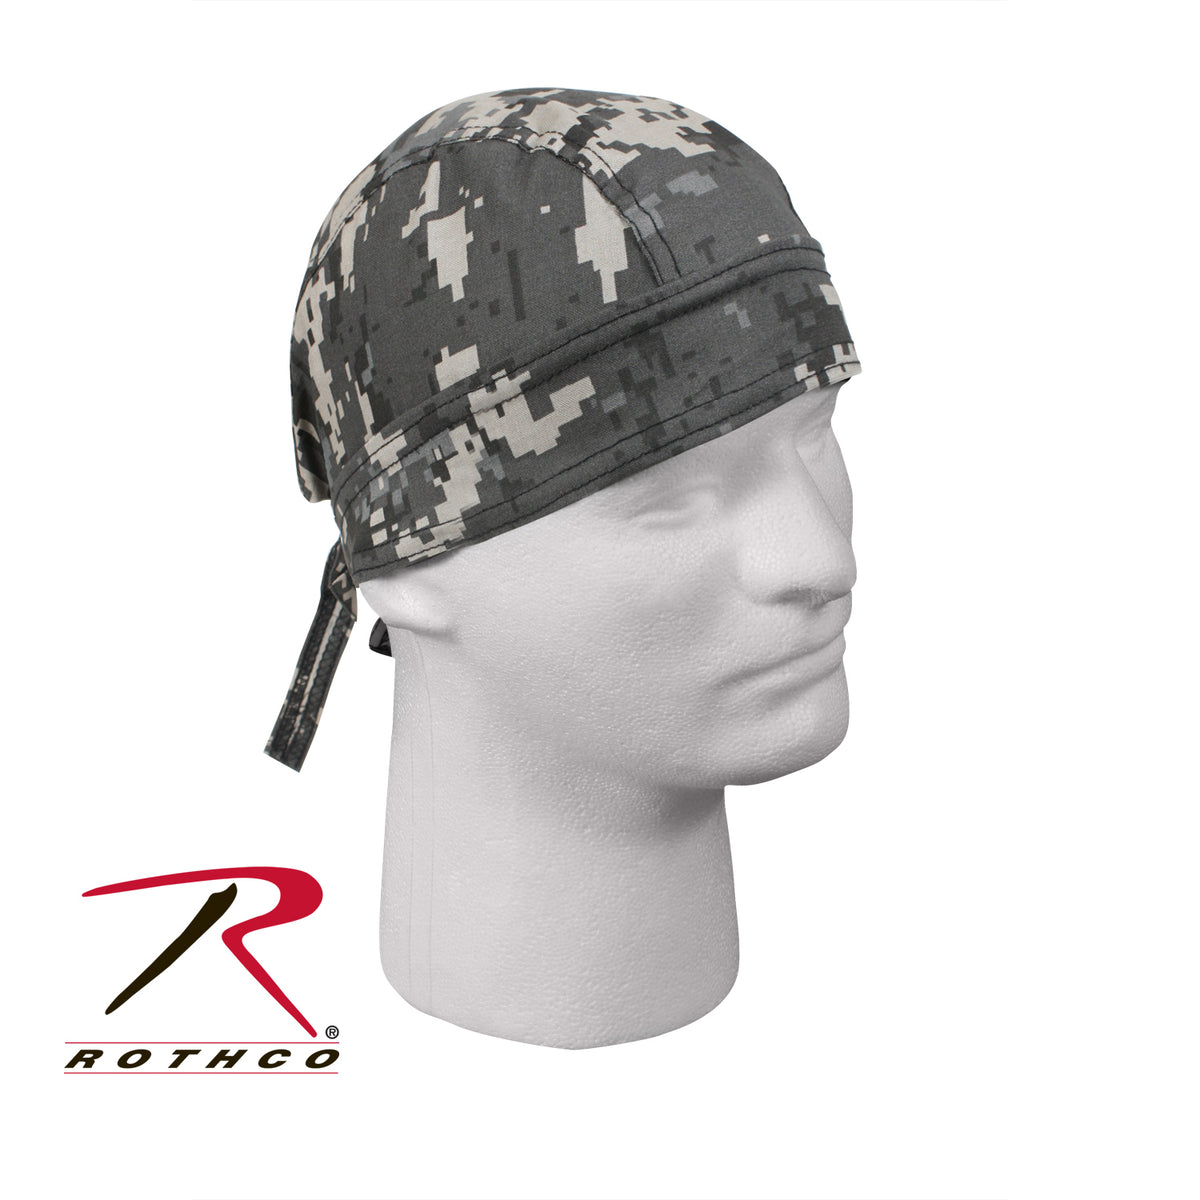 Rothco Digital Camo Headwrap - CLOSEOUT!